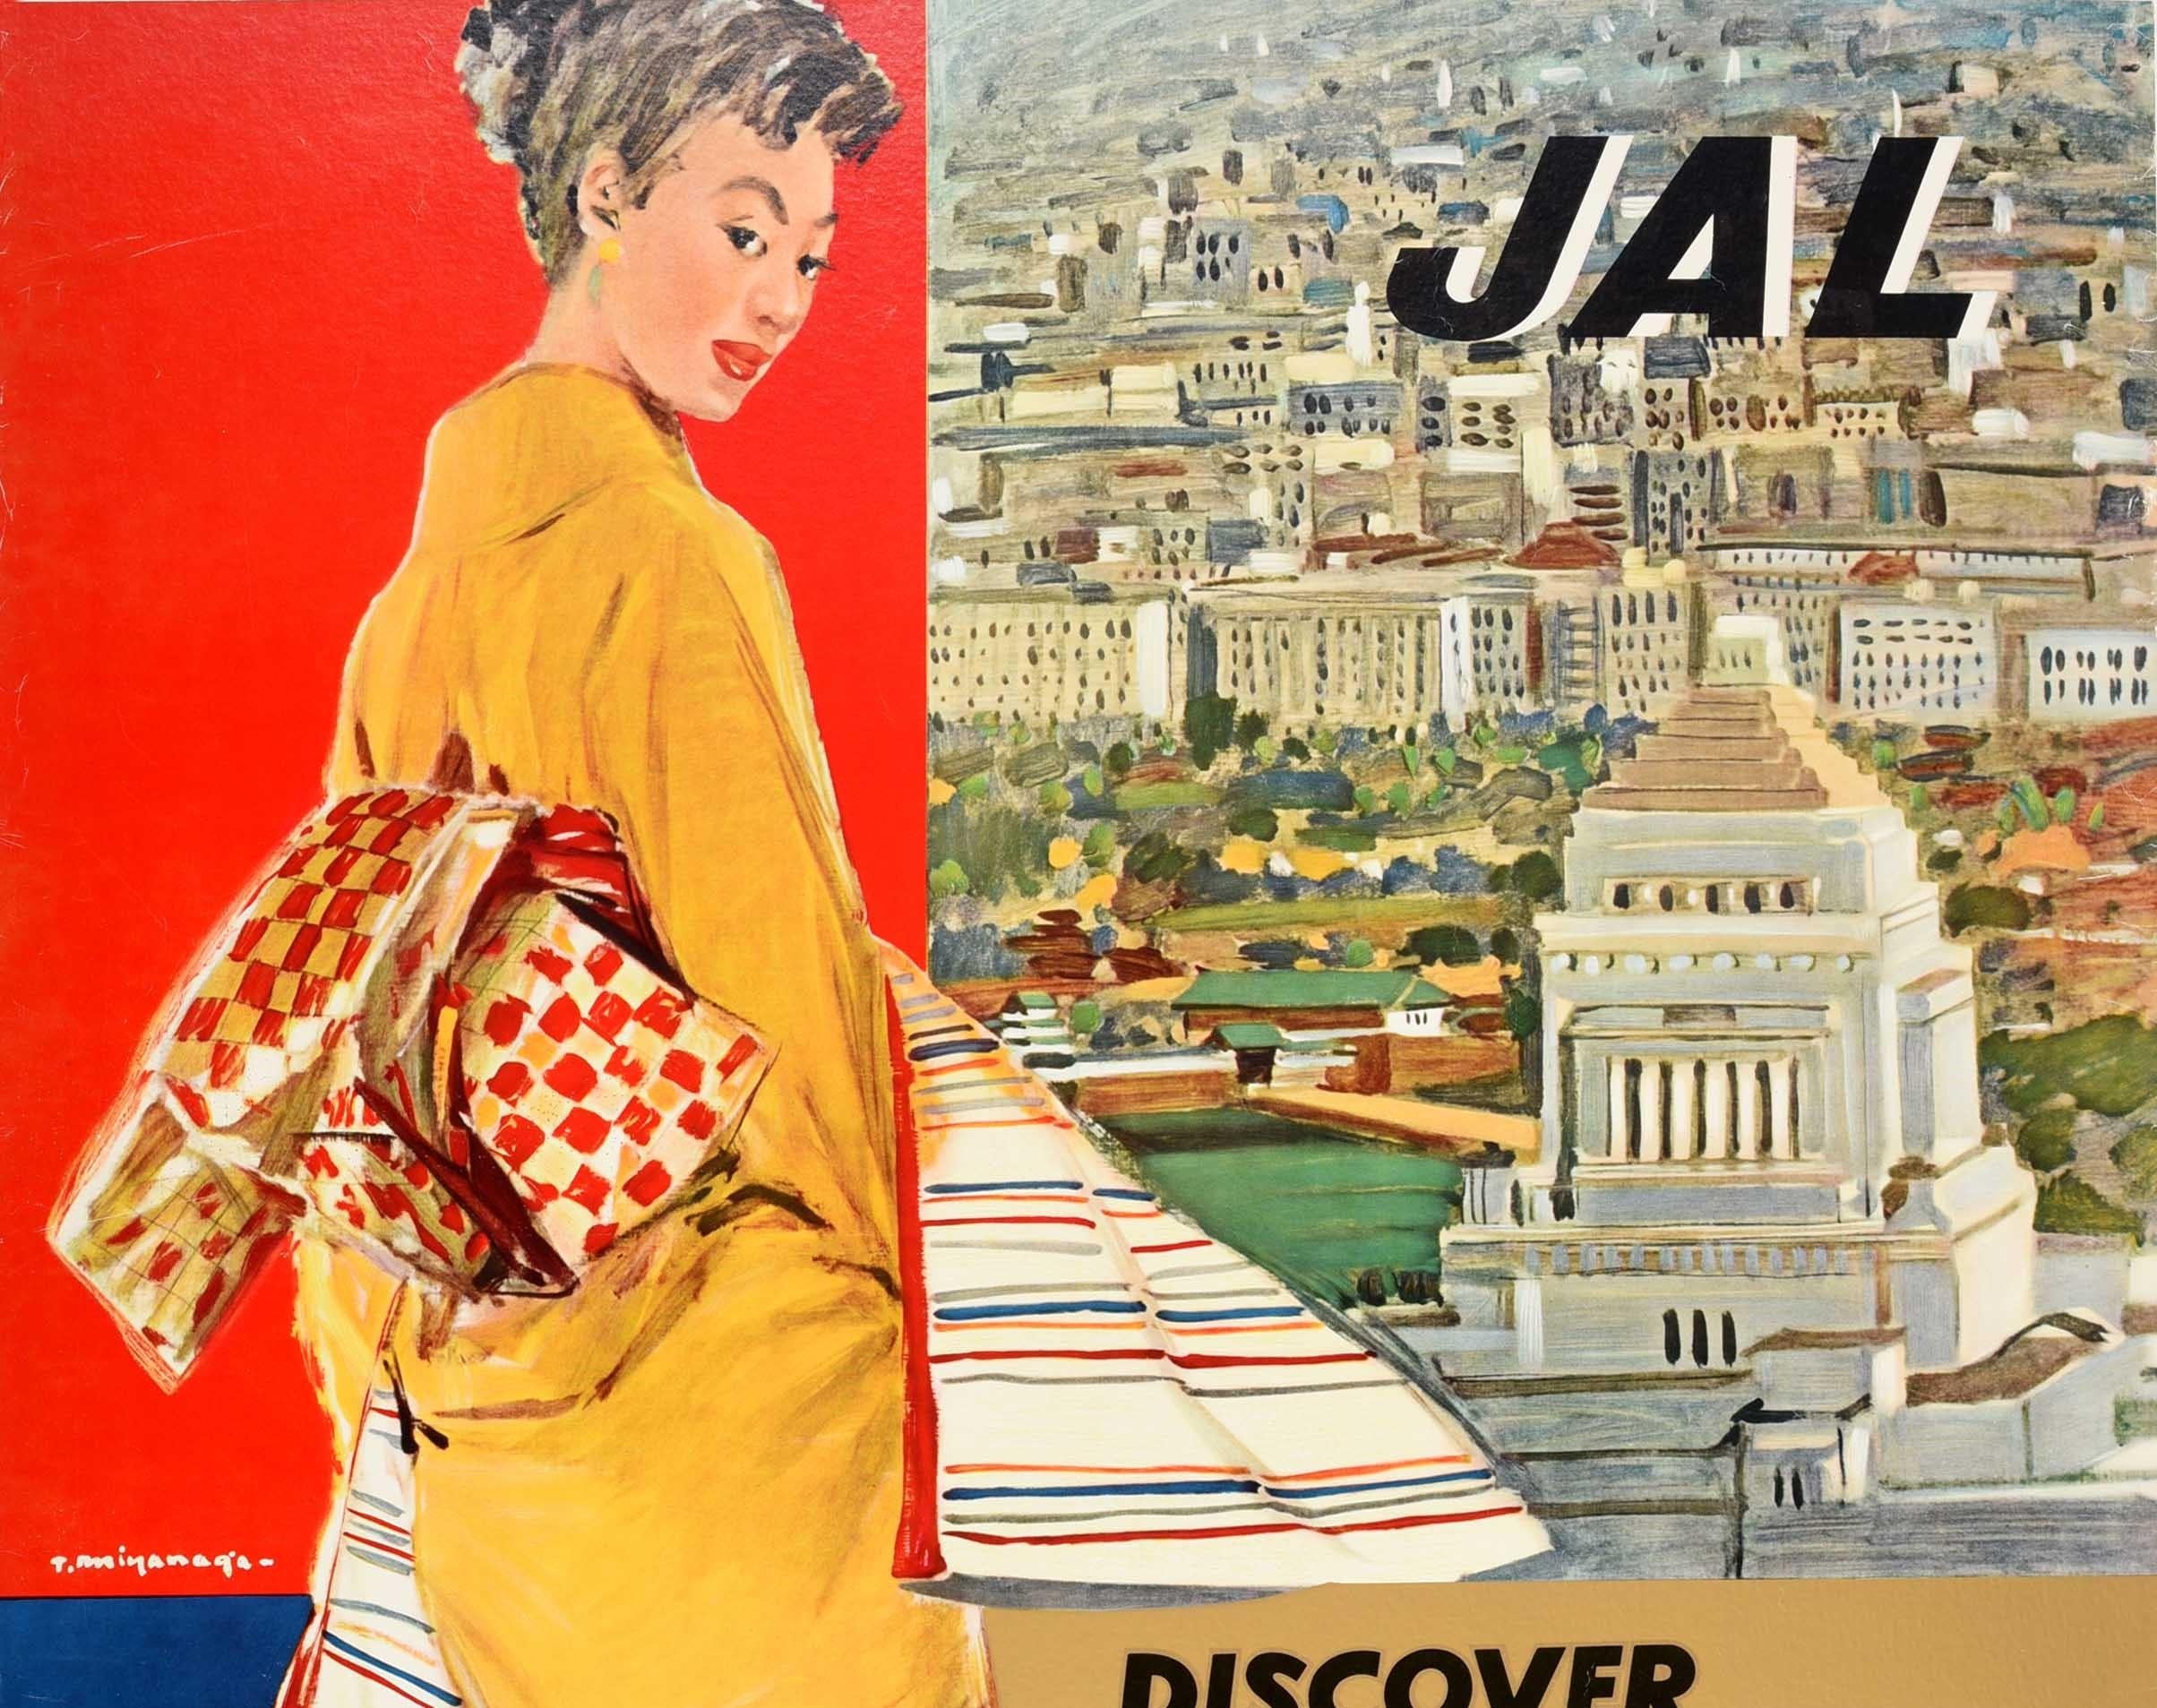 Original Vintage Travel Poster Discover Japan Air Lines JAL City View Kimono Art - Print by T Miyanaga